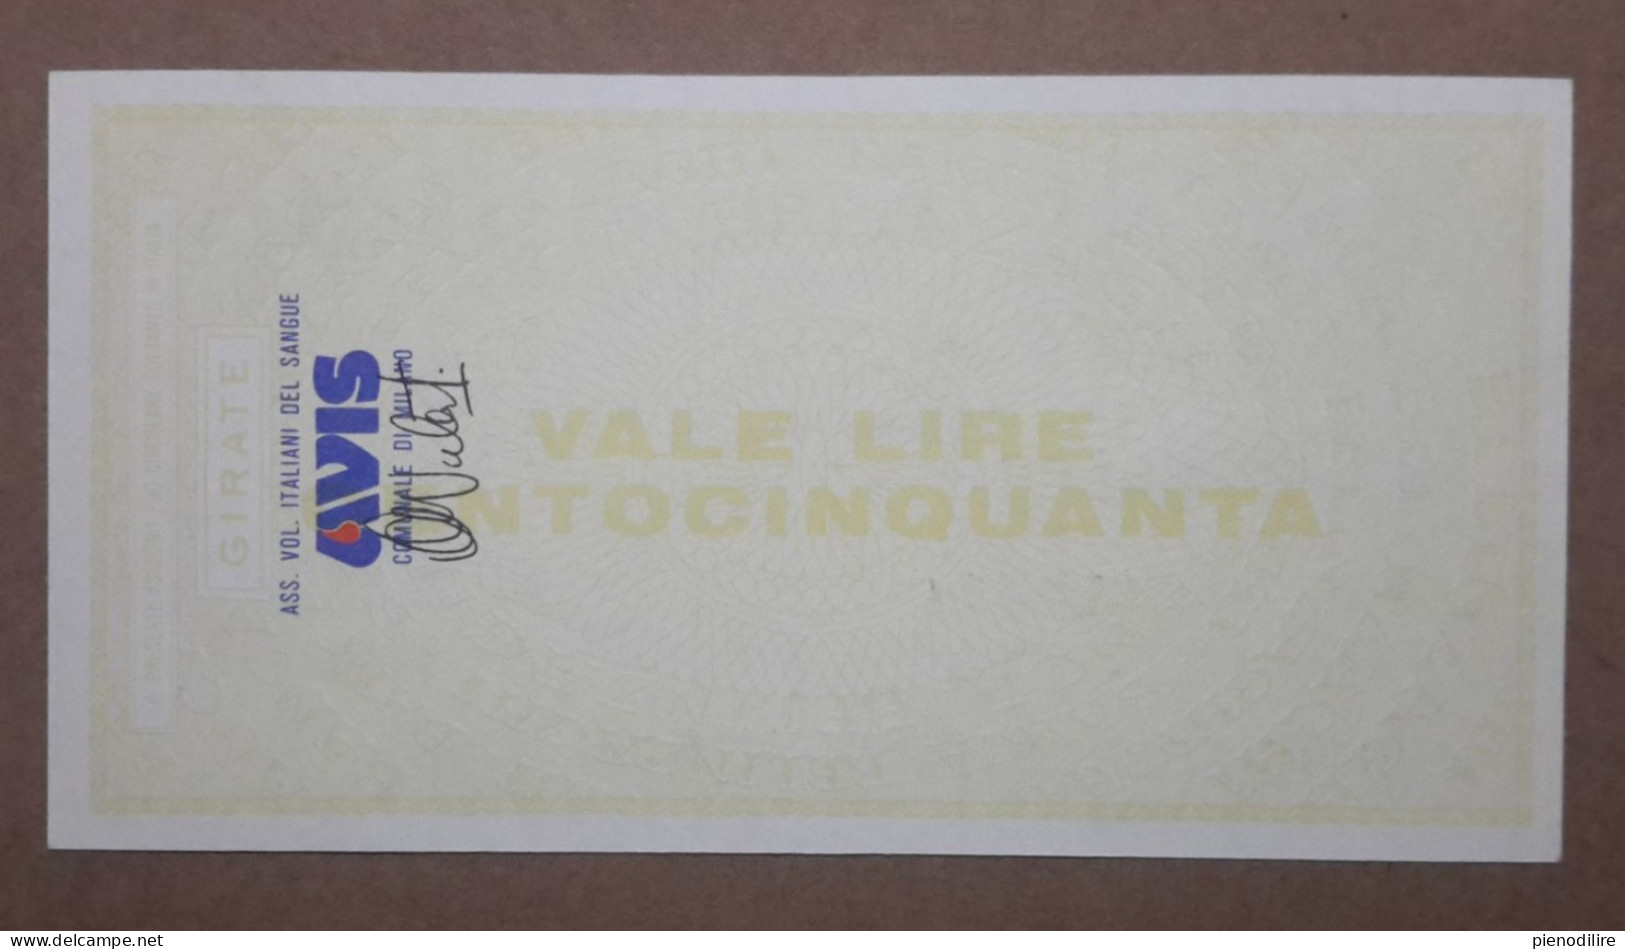 BANCA BELINZAGHI, 150 LIRE 30.06.1977 A.V.I.S. MILANO (A1.92) - [10] Cheques Y Mini-cheques